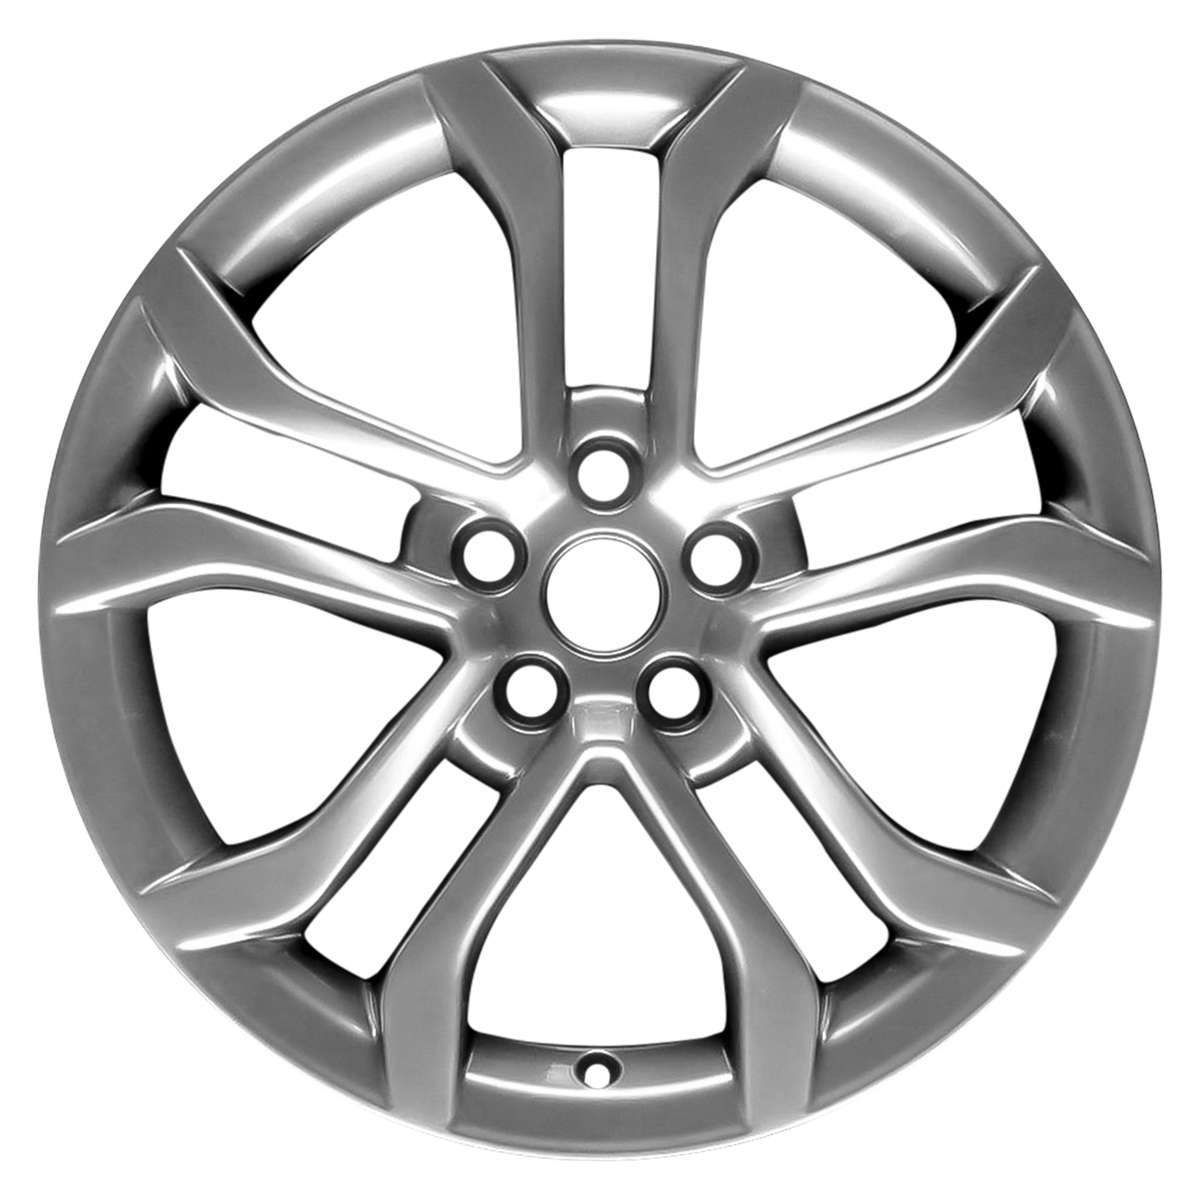 2017 Ford Fusion 18" OEM Wheel Rim W10120S